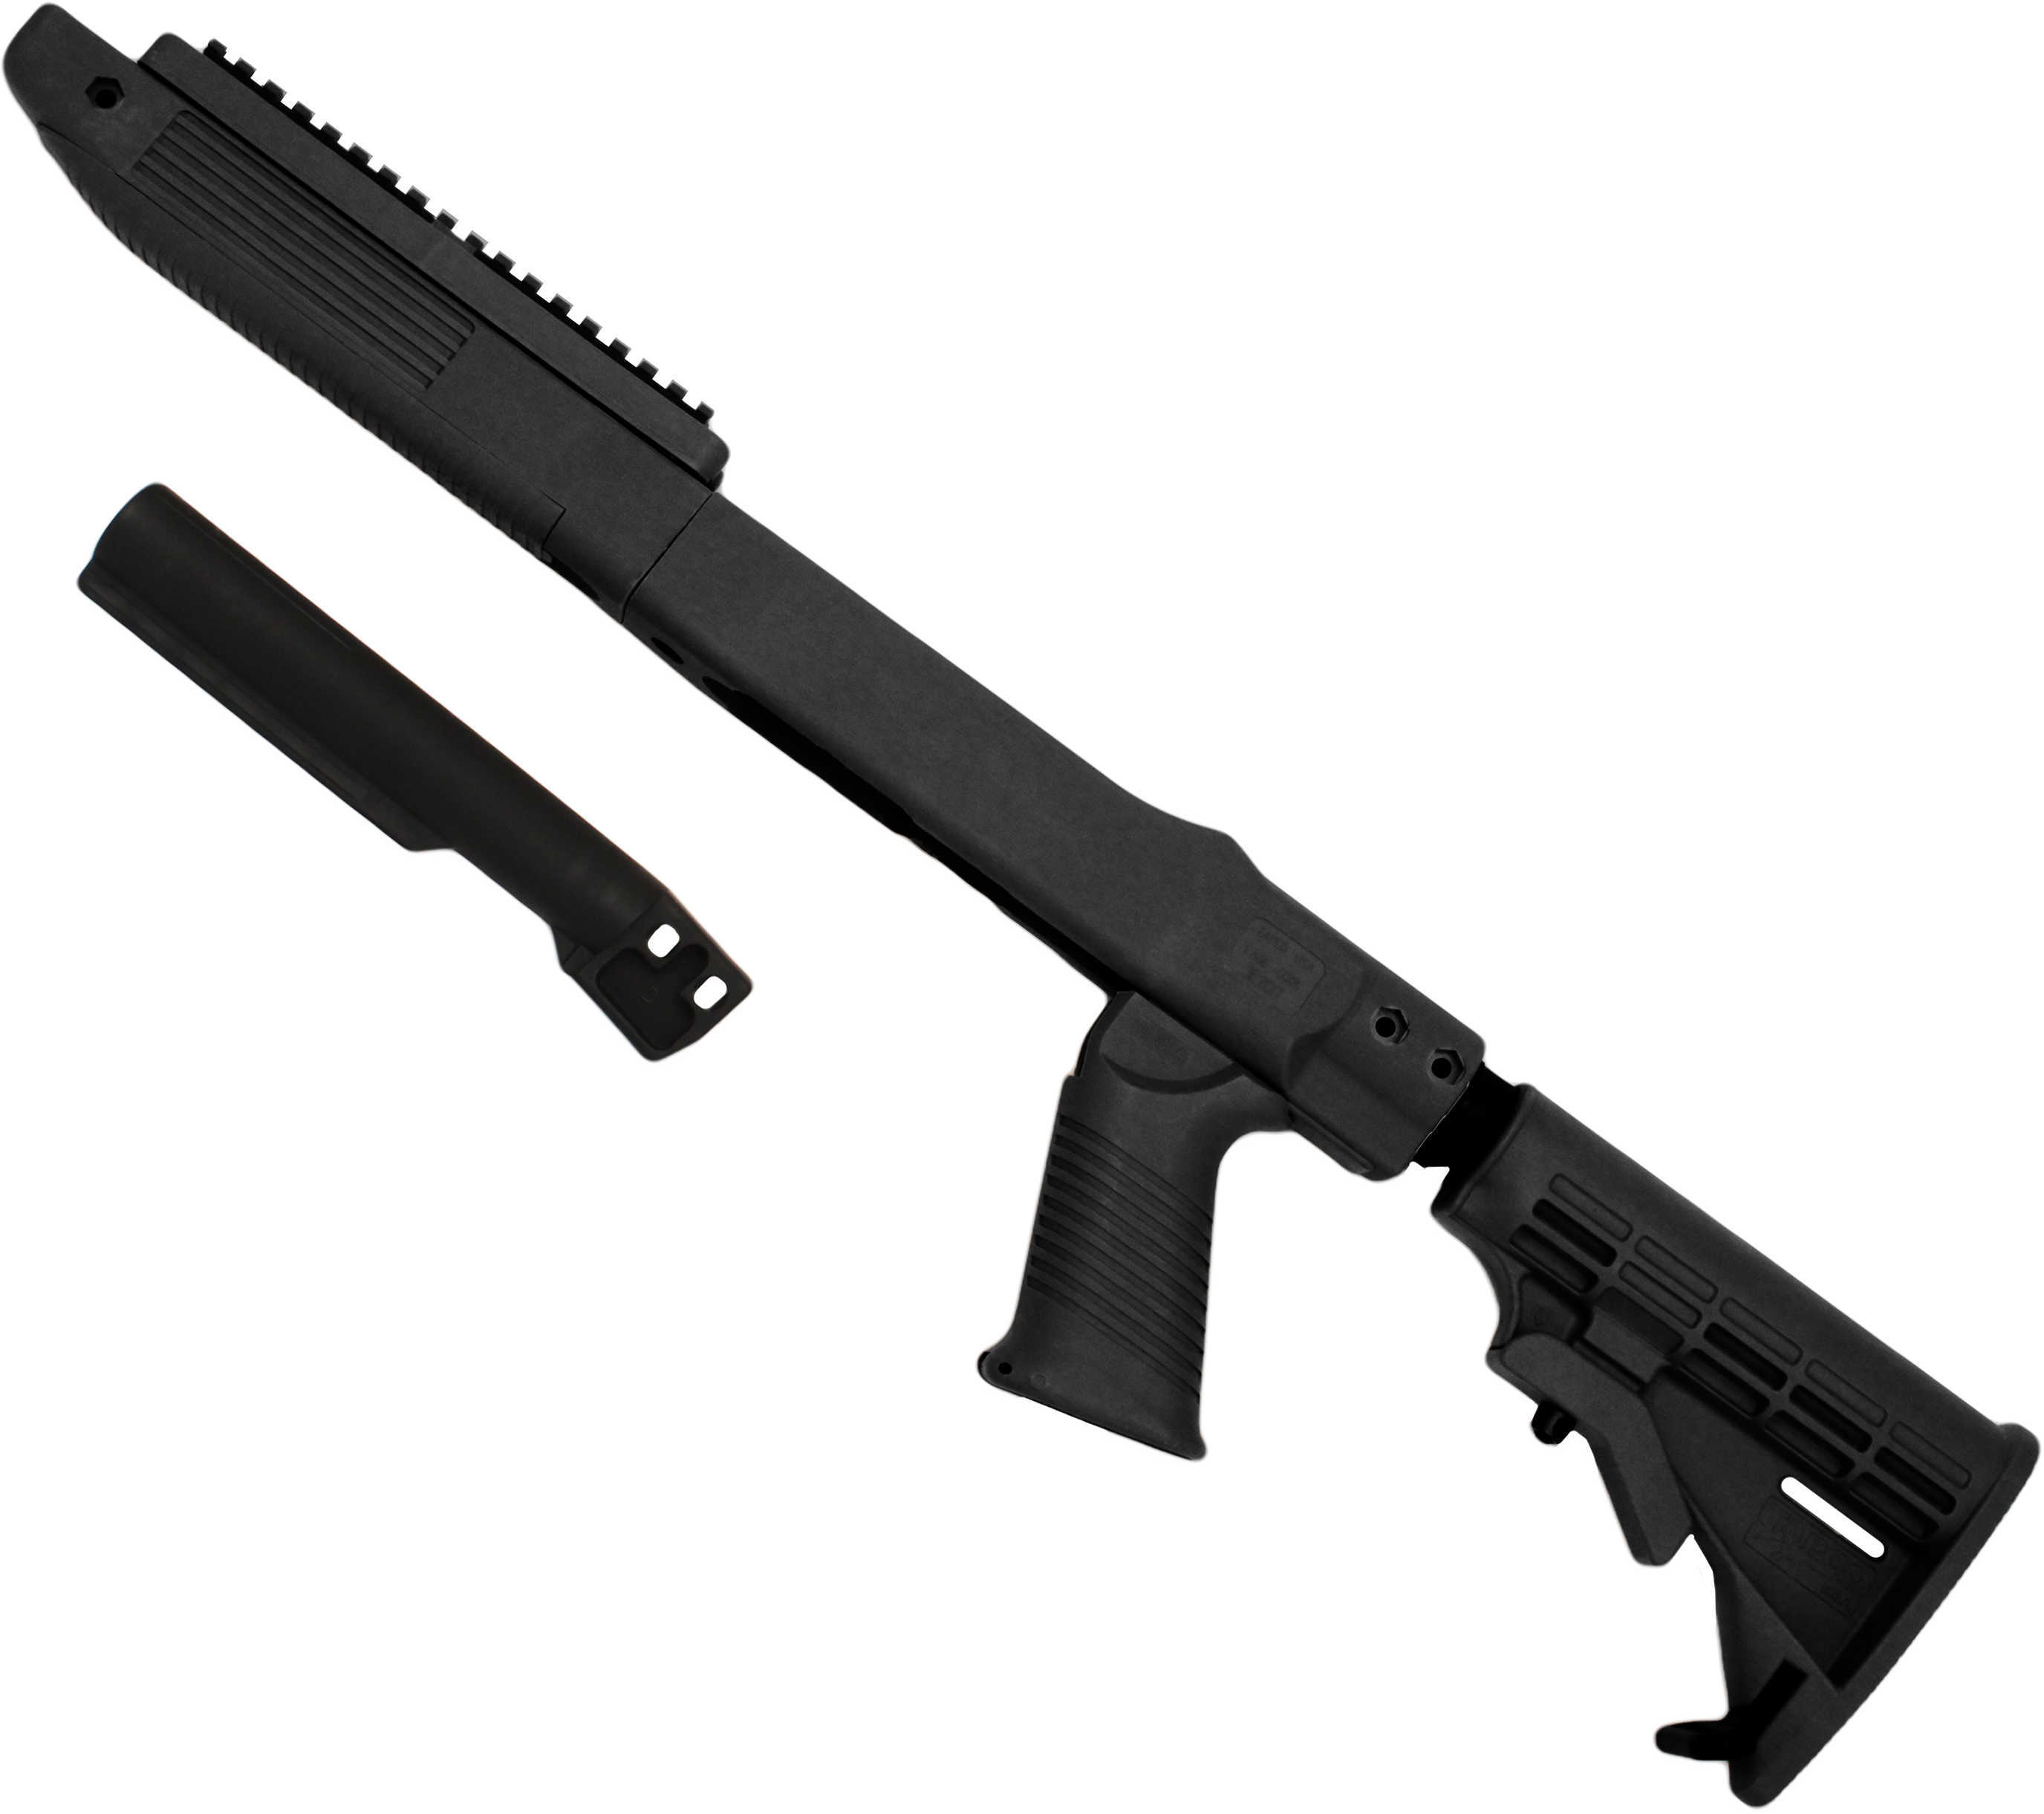 Tapco Inc. Intrafuse Black 10/22 Takedown Rifle System Ruger STK63163